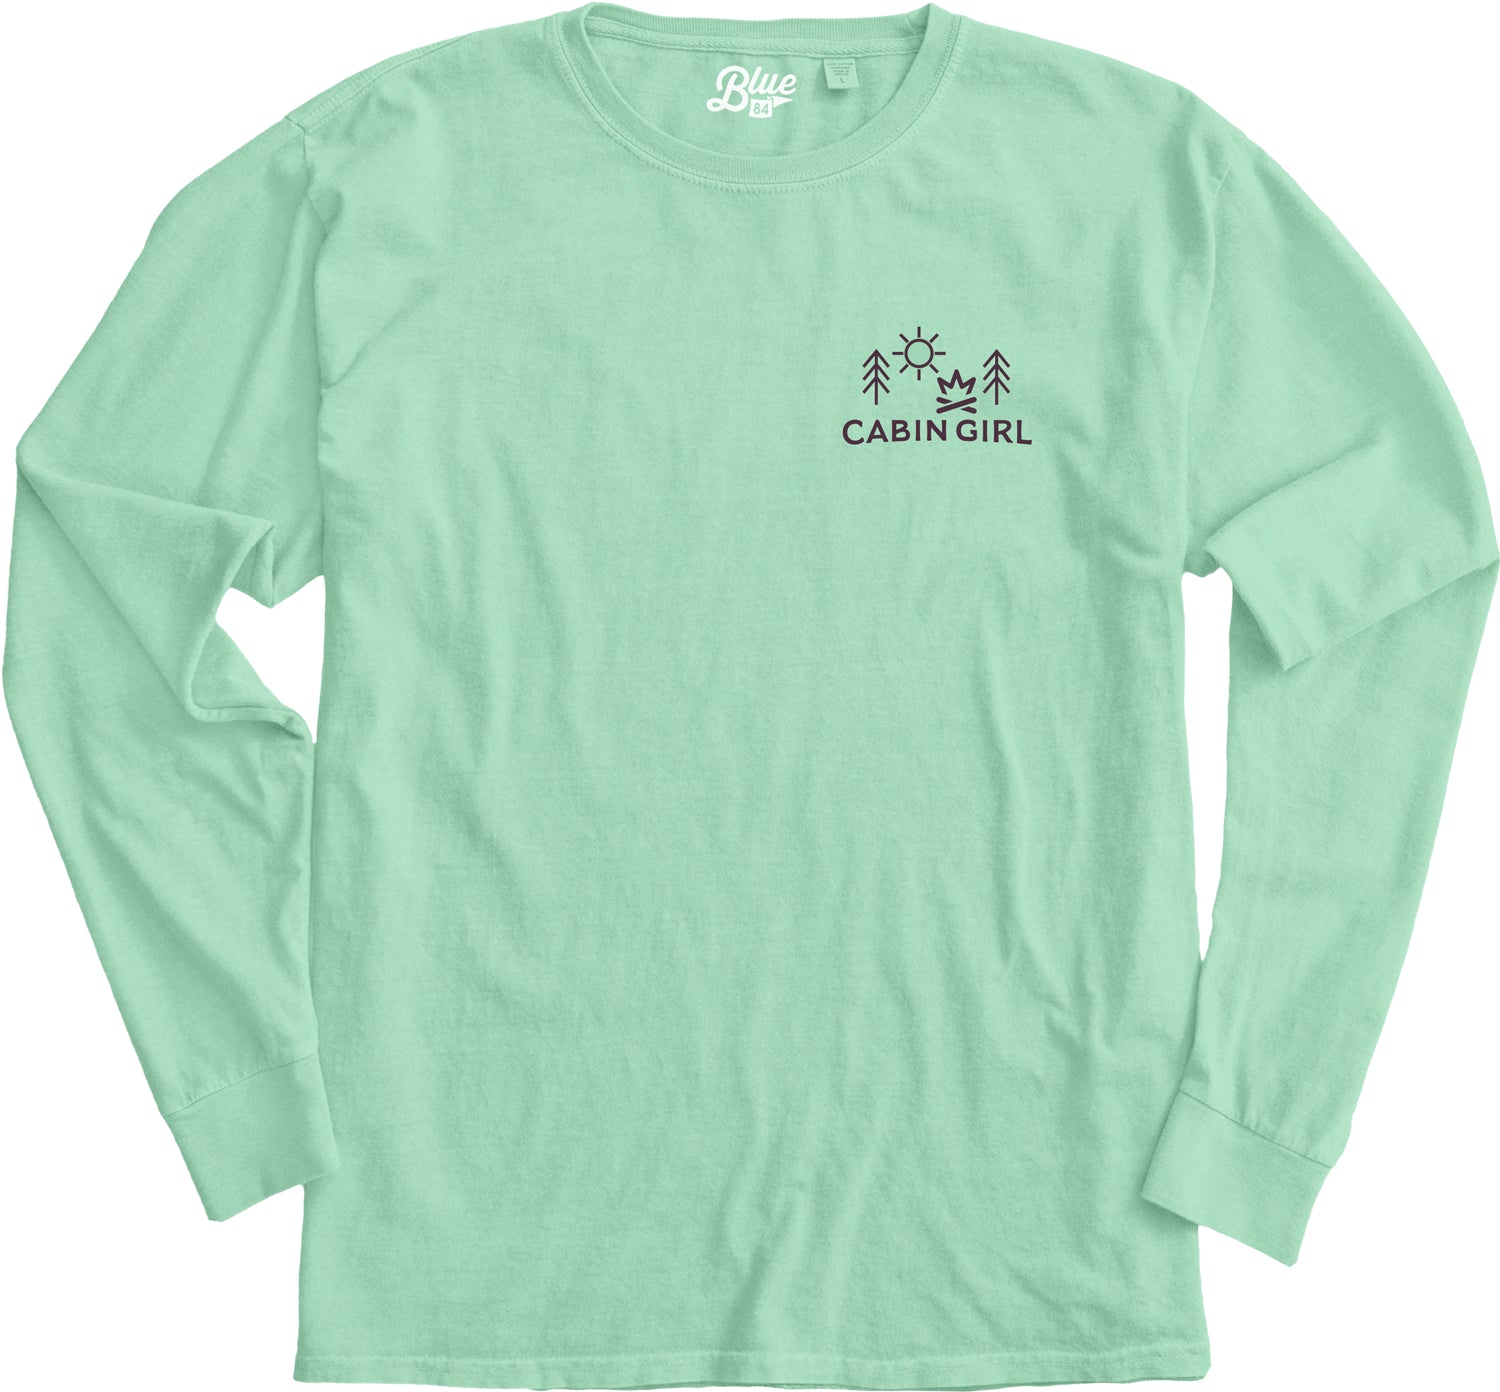 Cabin Adventures Cotton Long Sleeve T-shirt | Cabin Girl